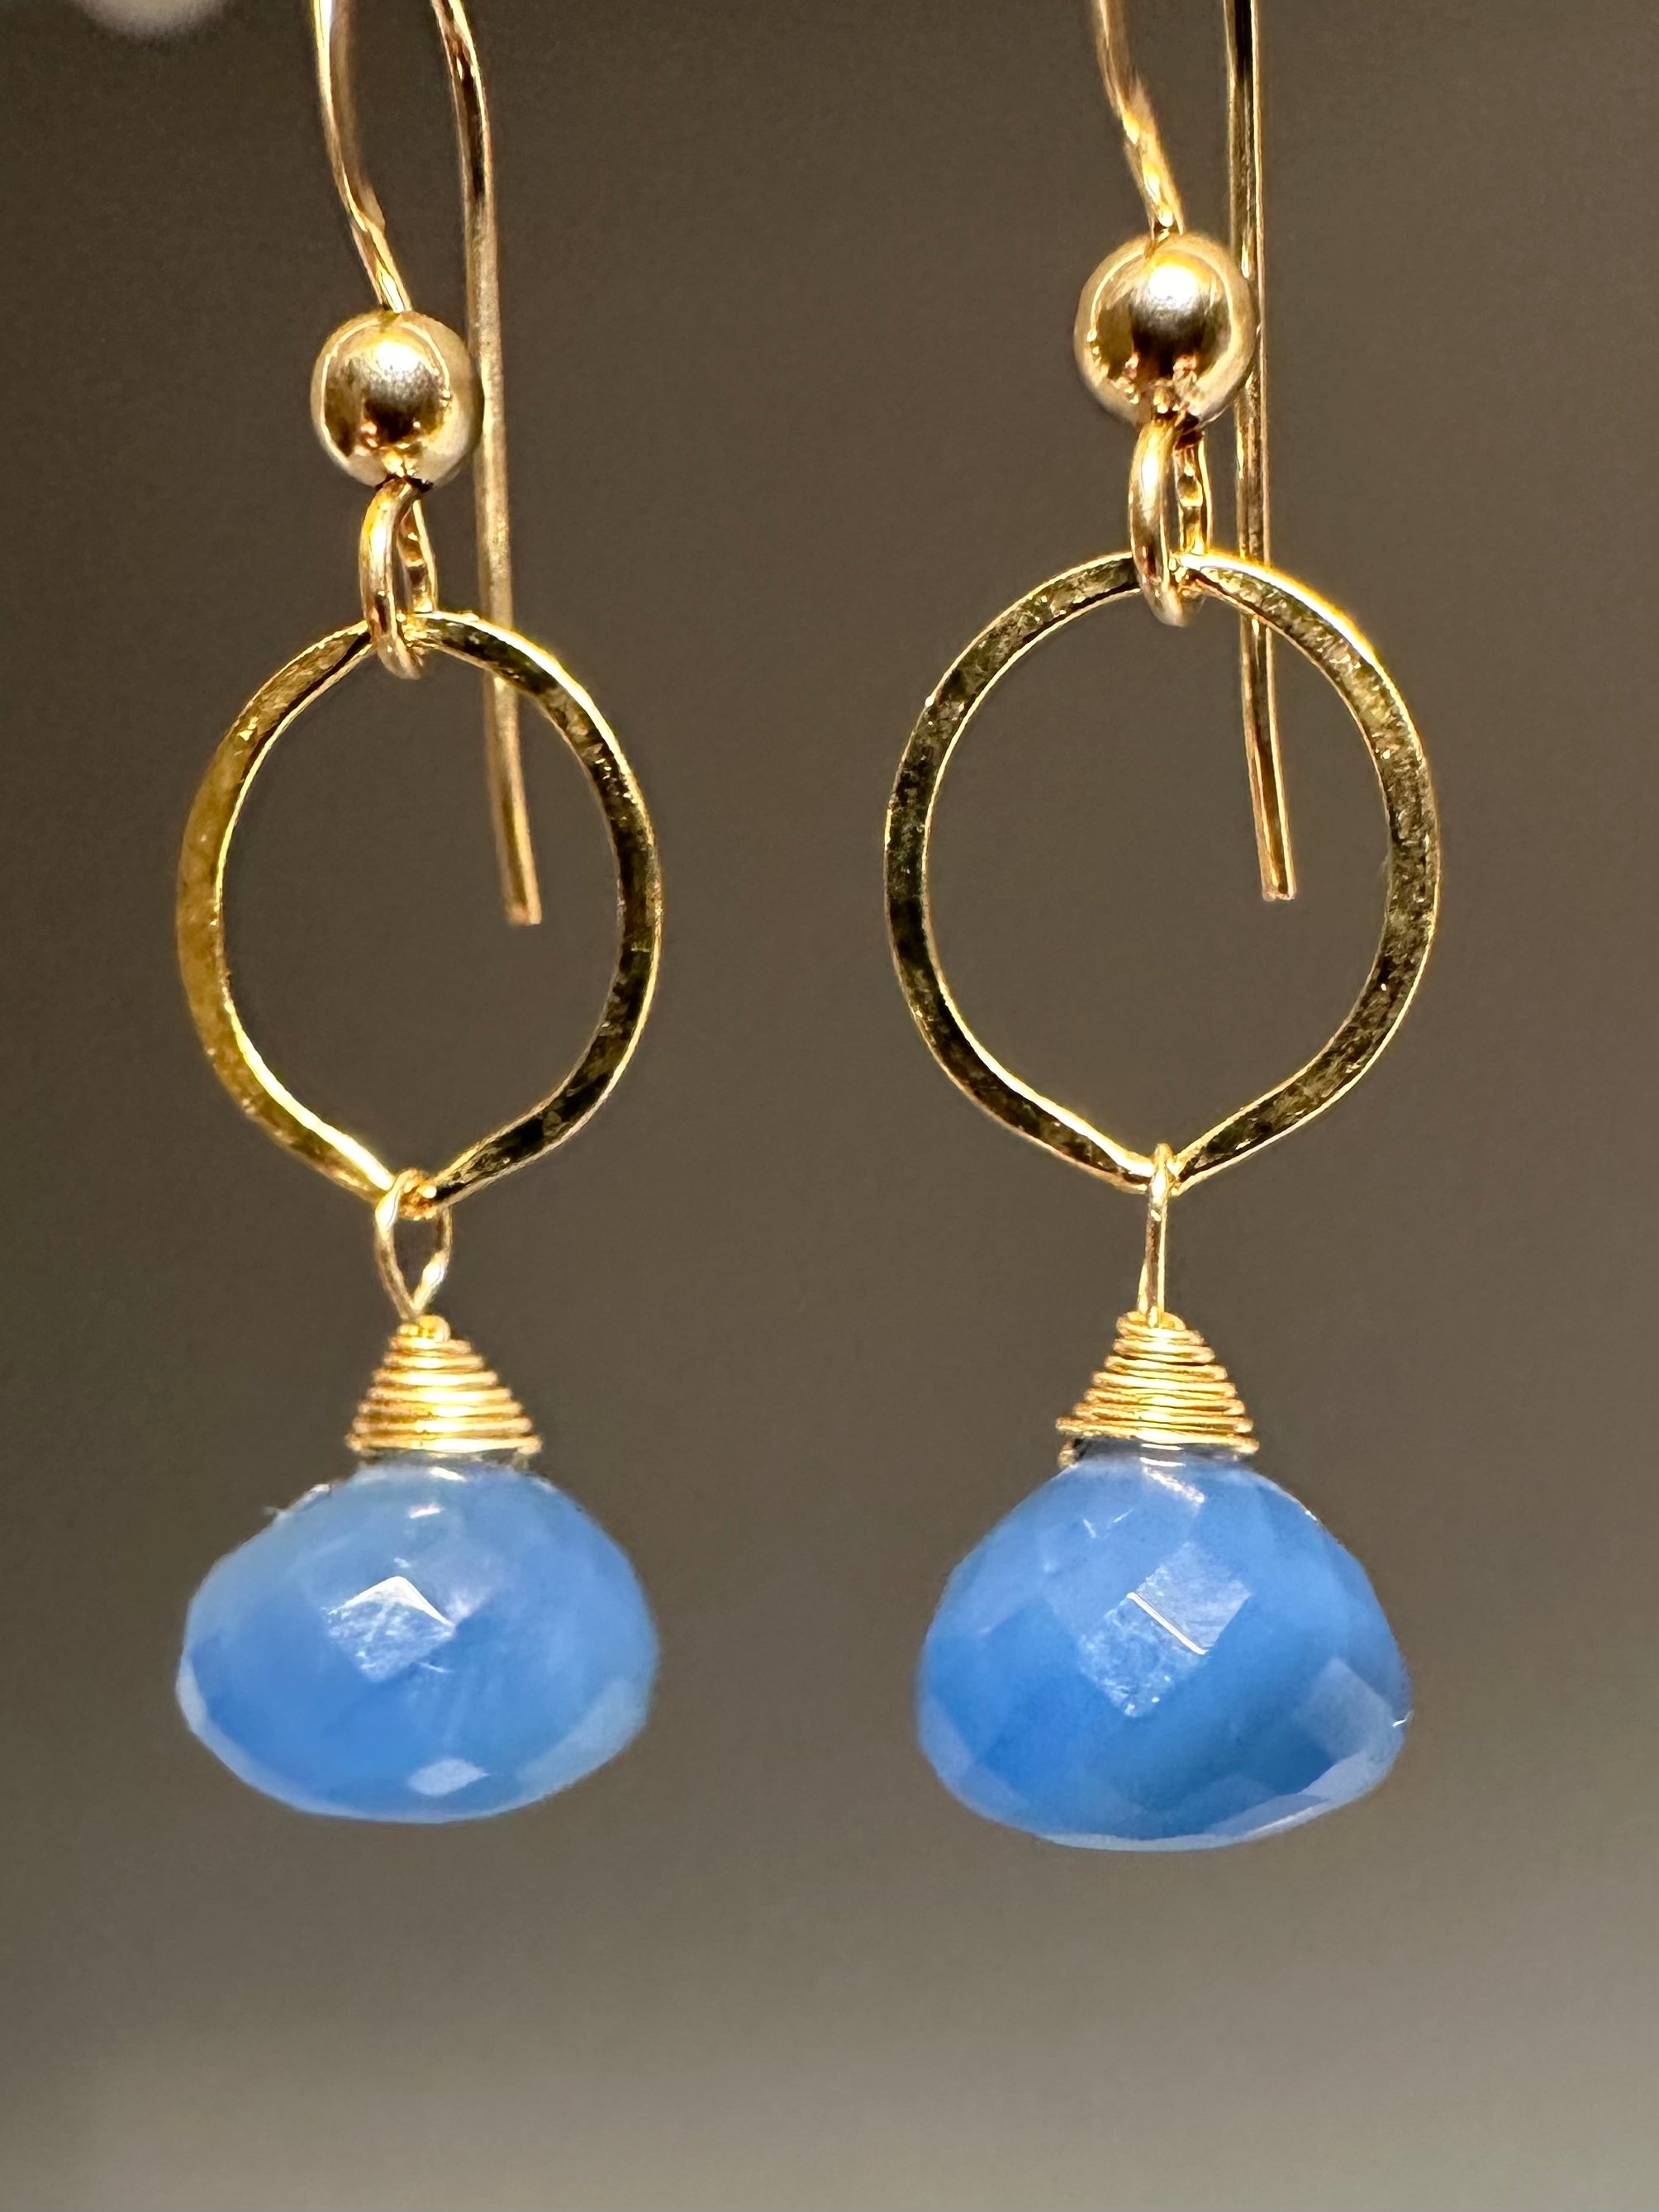 Pair of Blue Chalcedony Earrings